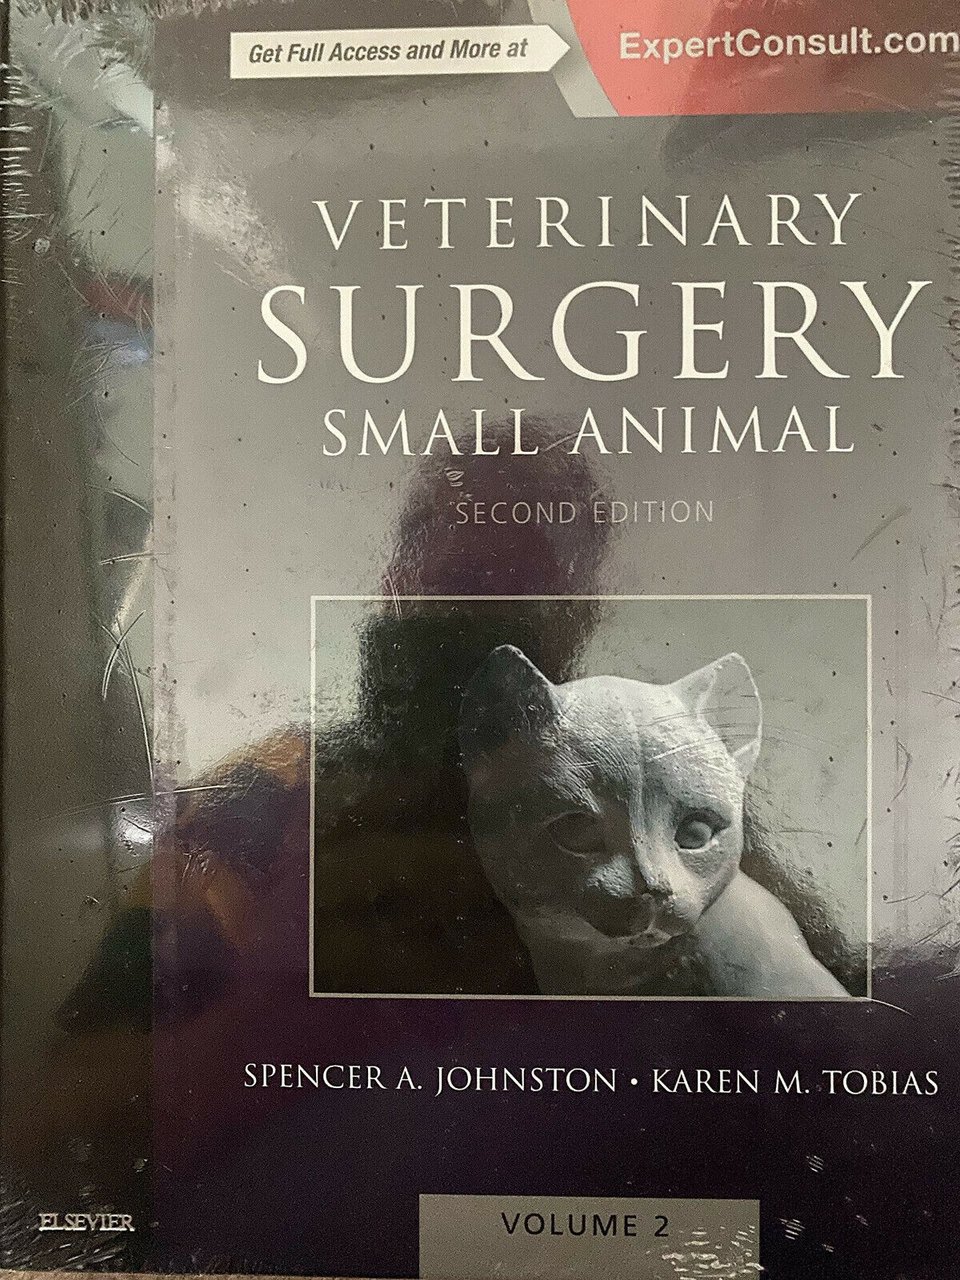 Veterinary Surgery: Small Animal Expert Consult - Spencer Johnston - …